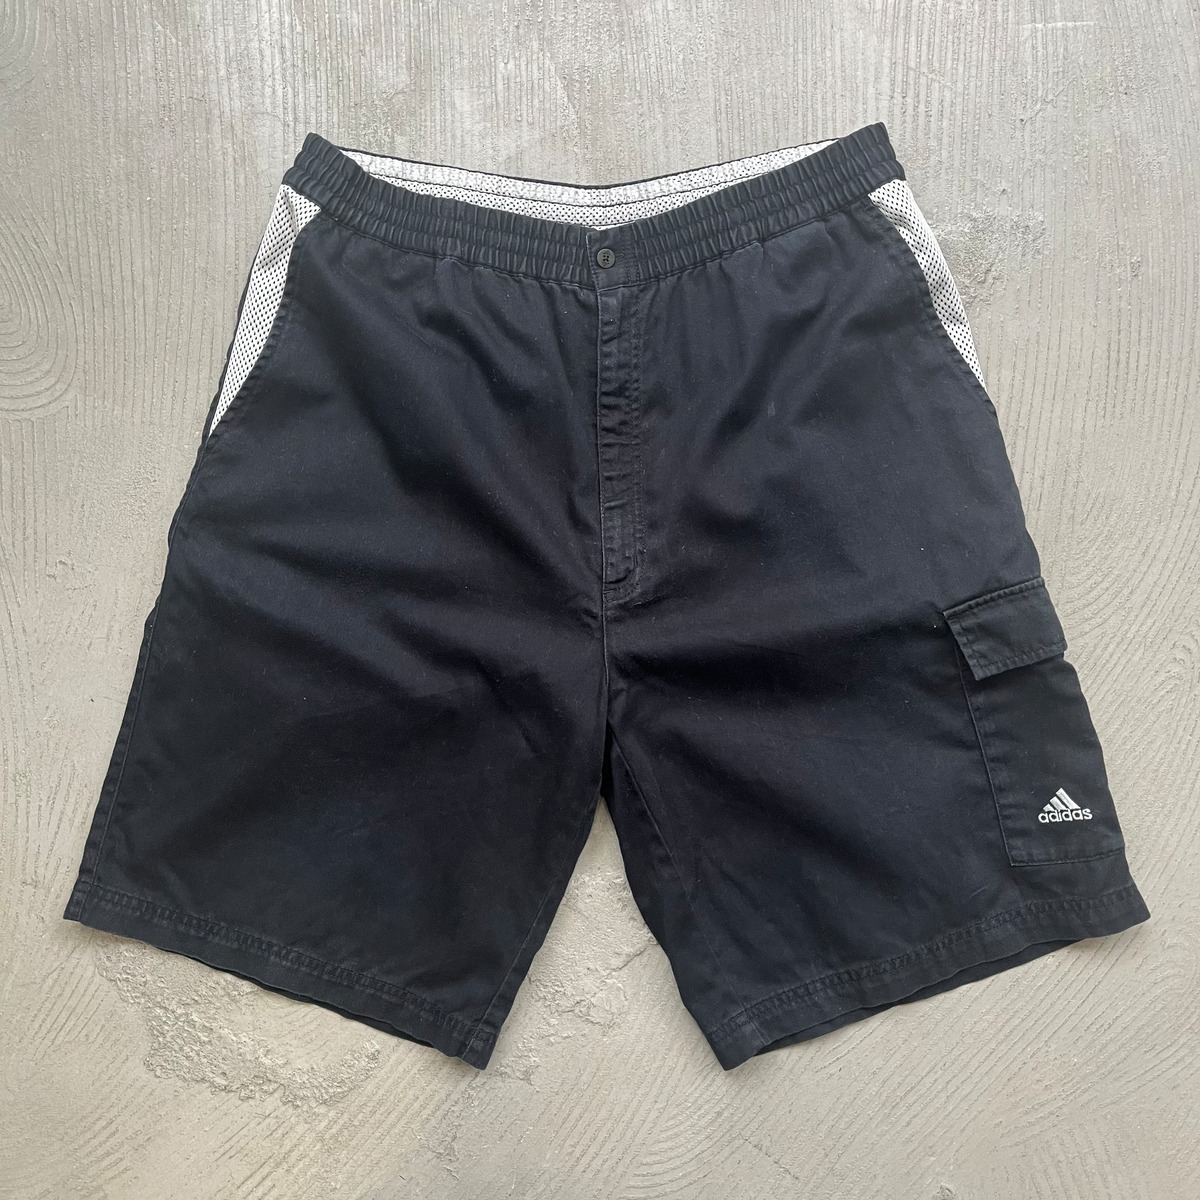 adidas / Navy shorts | SAMUEL FINCH / Online store